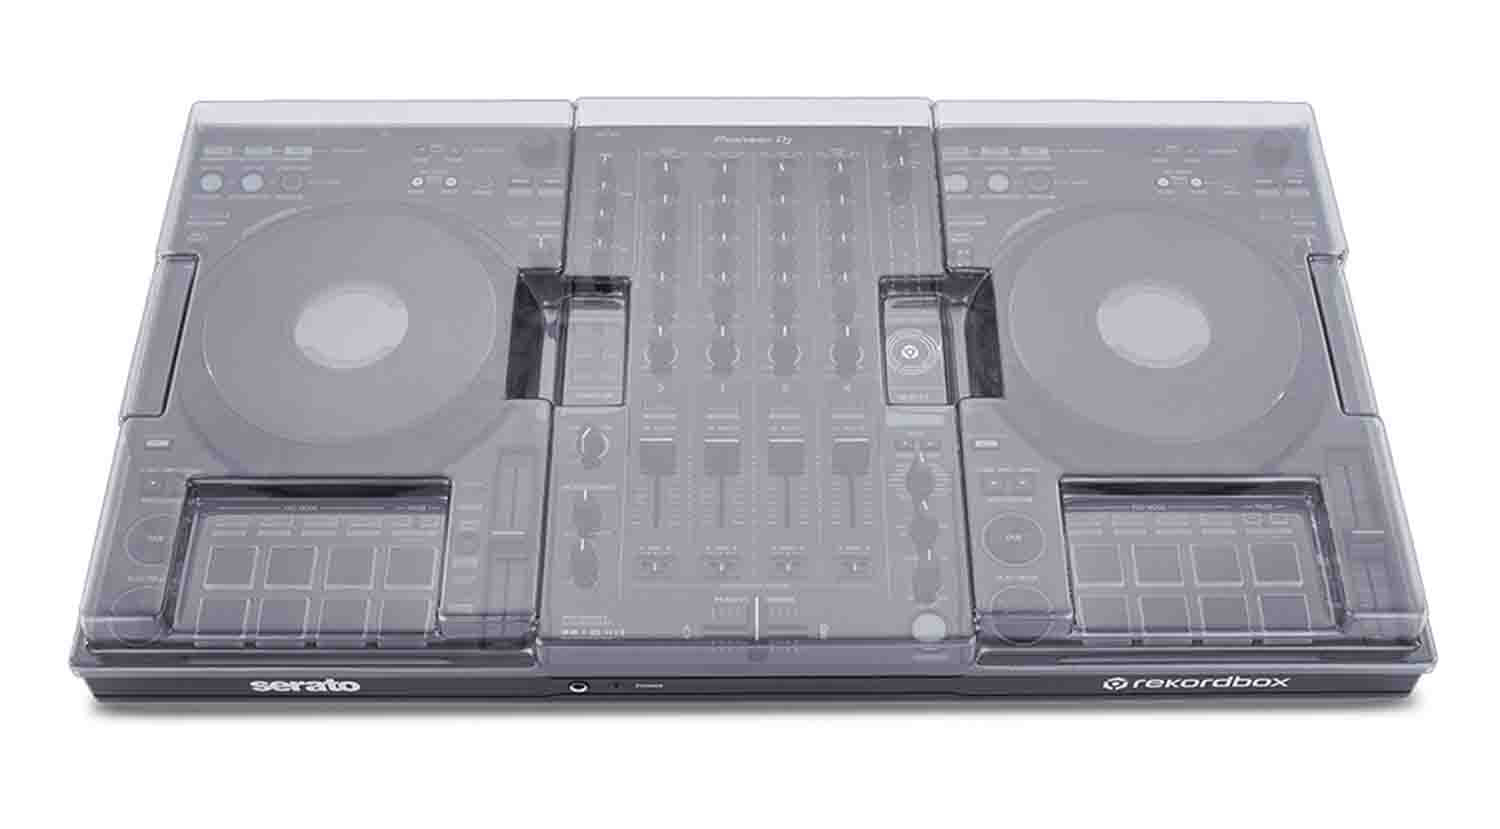 Decksaver DS-PC-DDJFLX10 Protection Cover for Pioneer DJ DDJ-FLX10  DJ Controller - Hollywood DJ